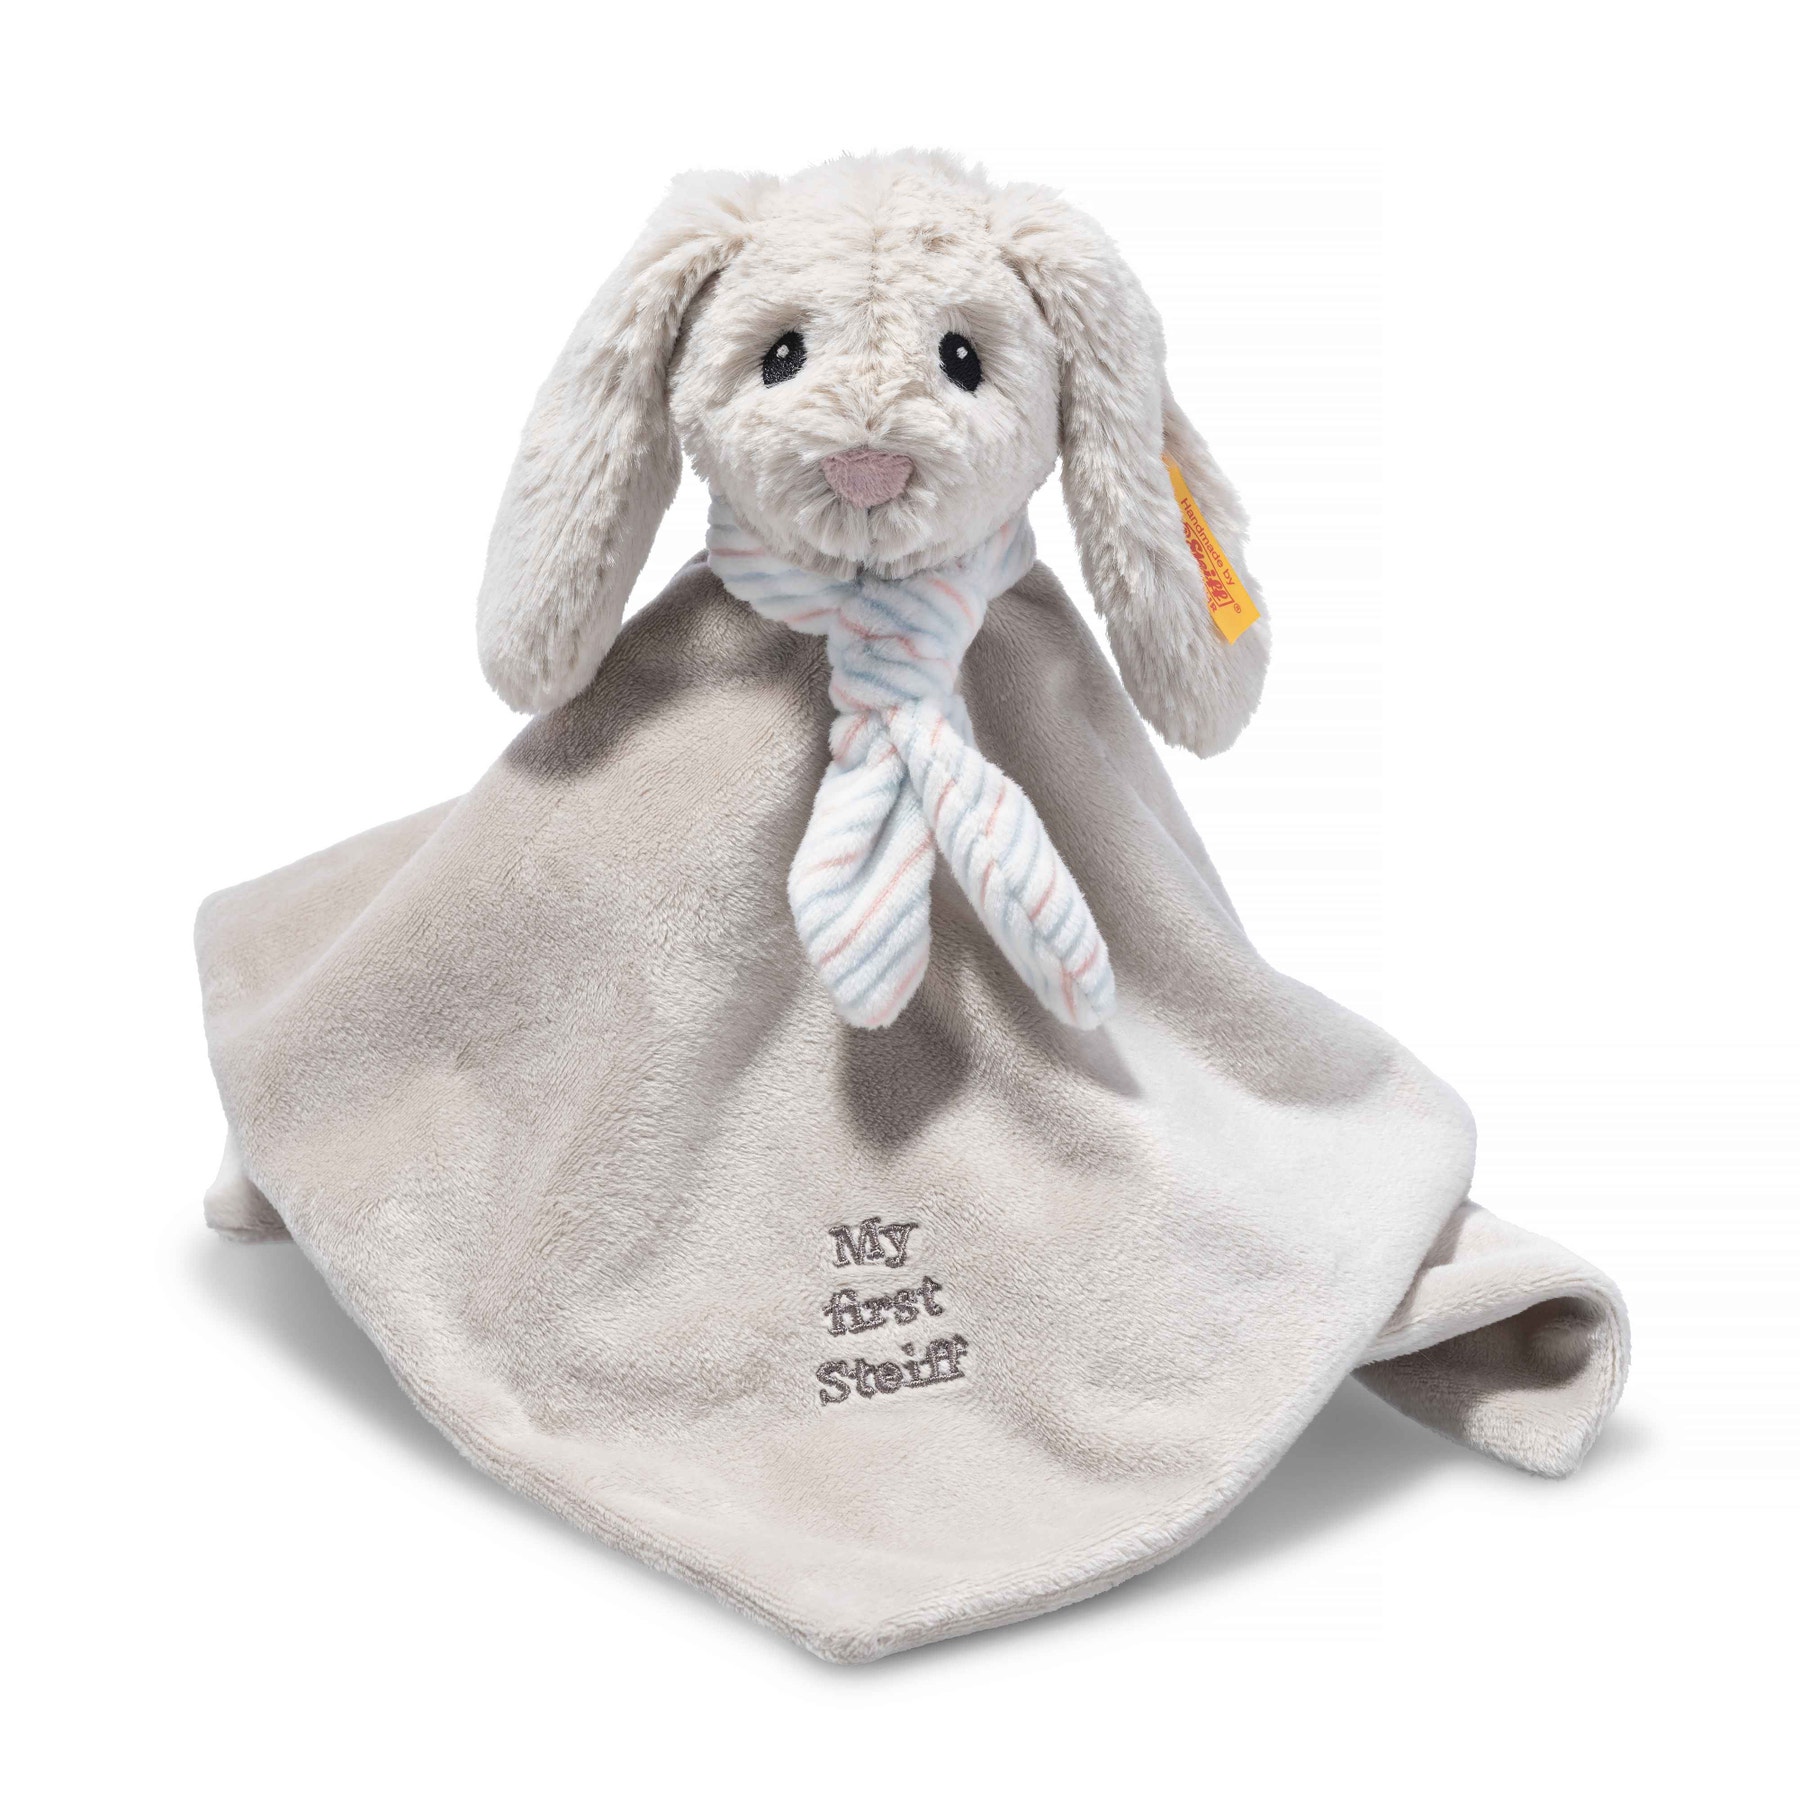 My first Steiff Hoppie rabbit comforter